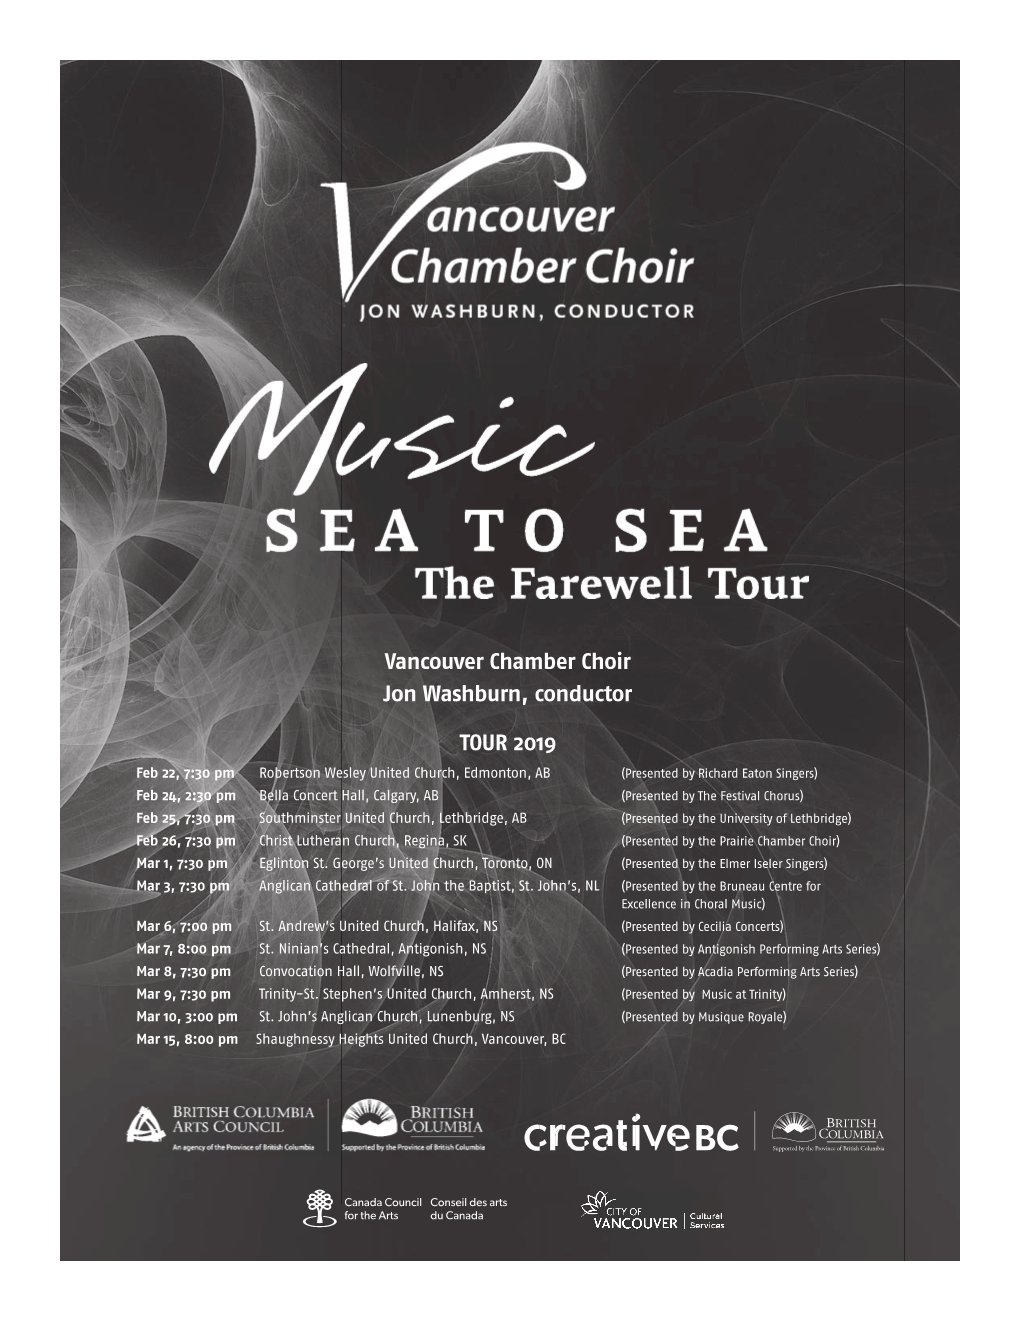 Vancouver Chamber Choir Jon Washburn, Conductor